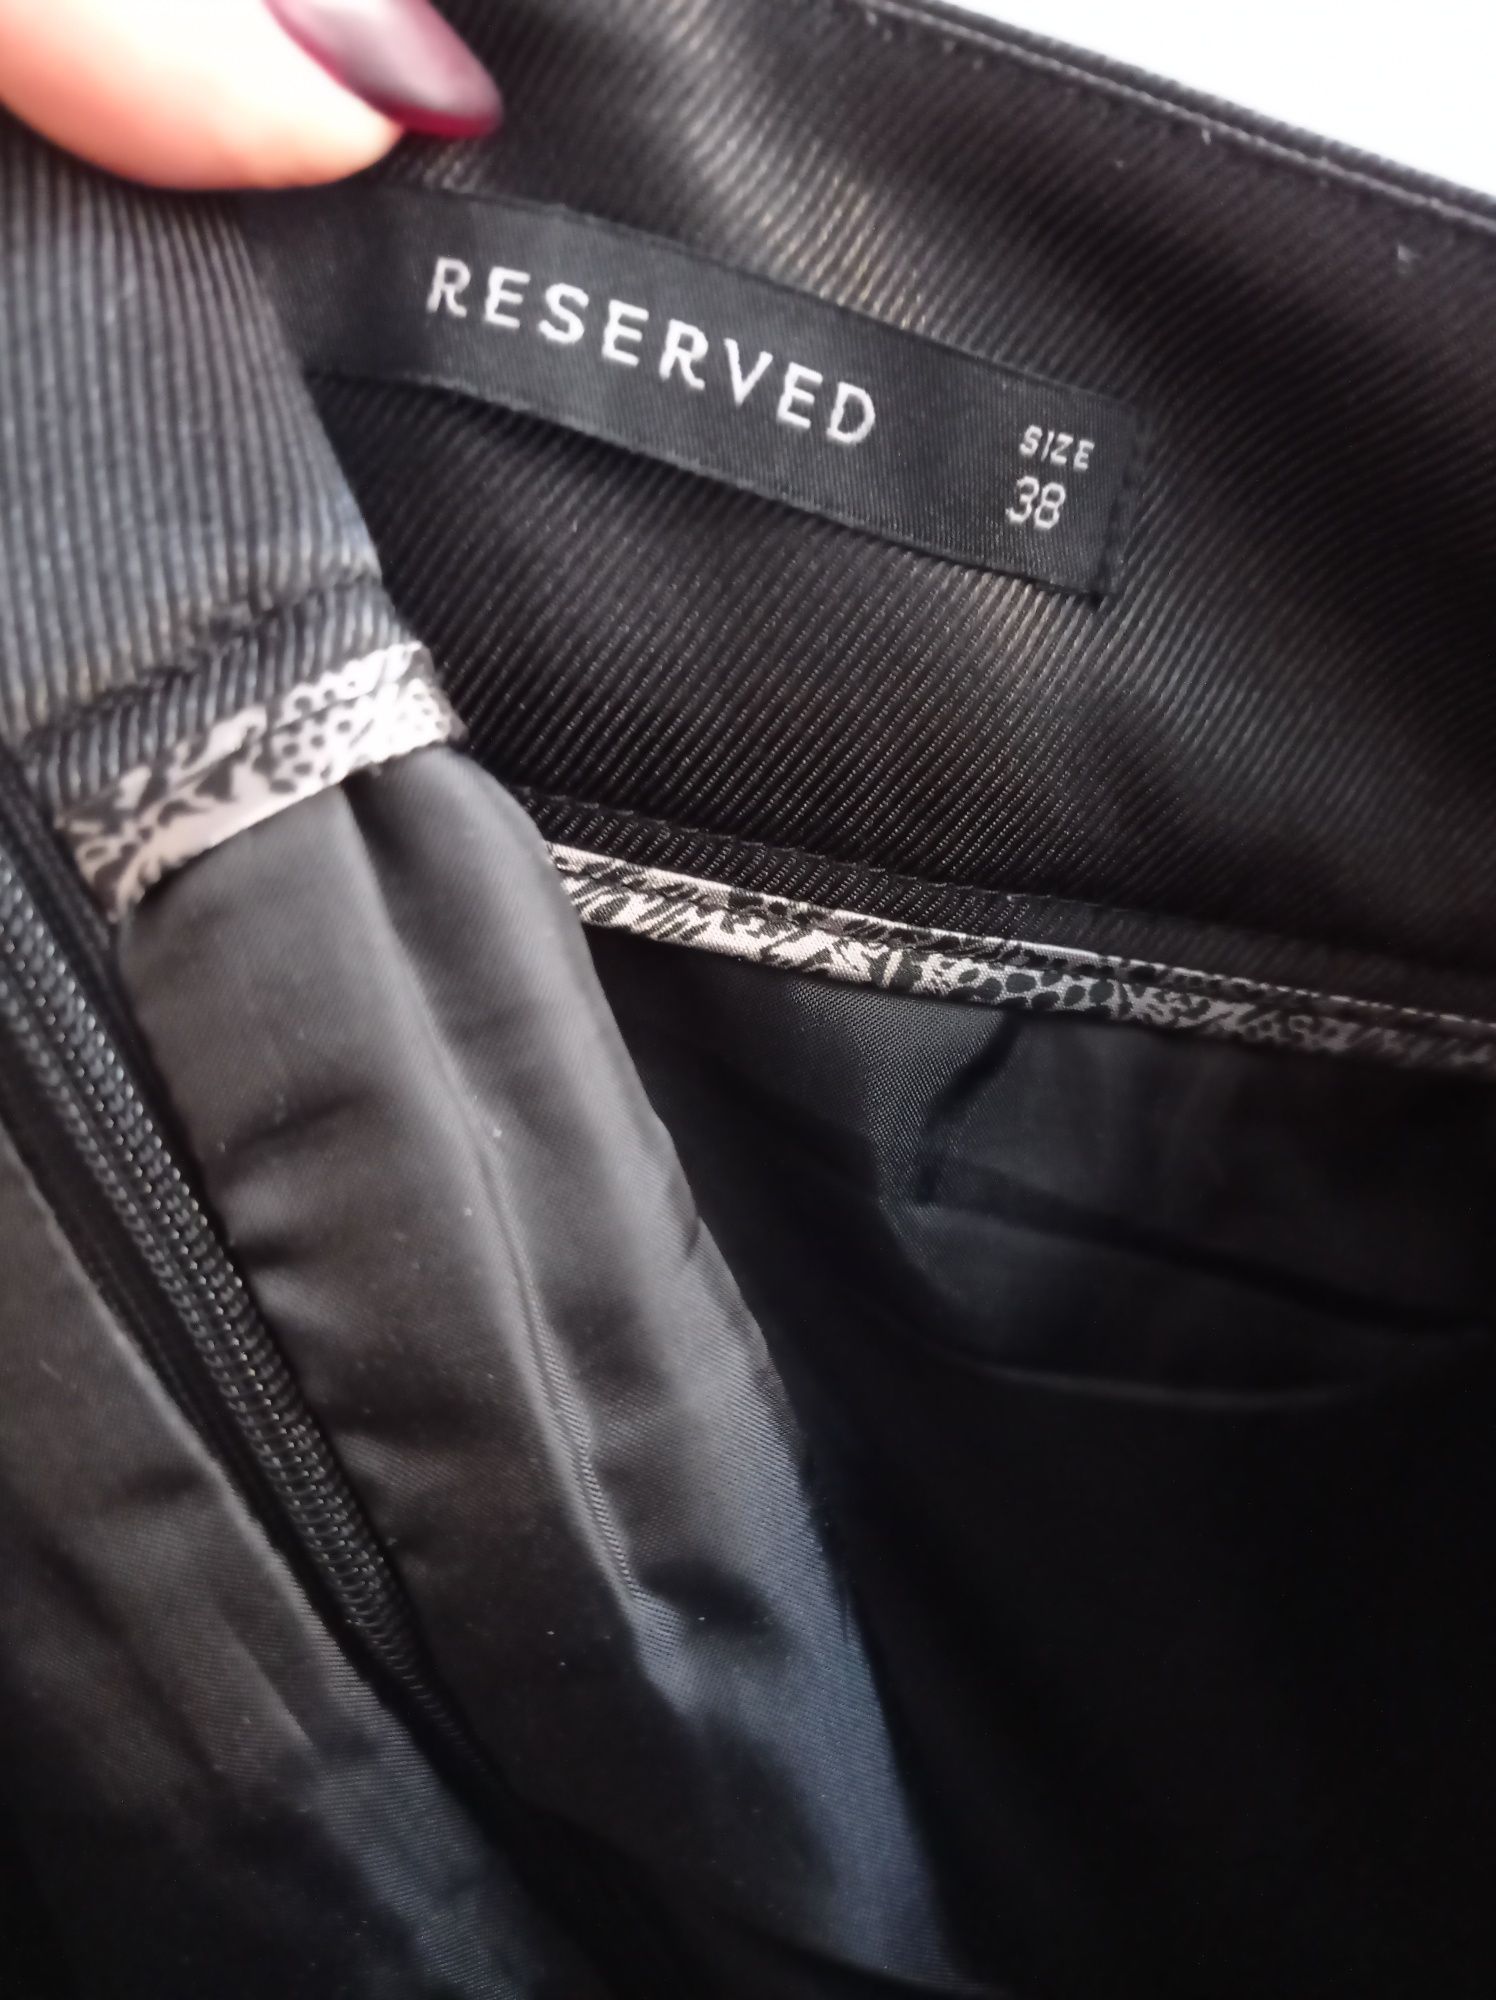 38 M spódnica czarna ołówkowa Reserved elegancka do pracy na egzamin